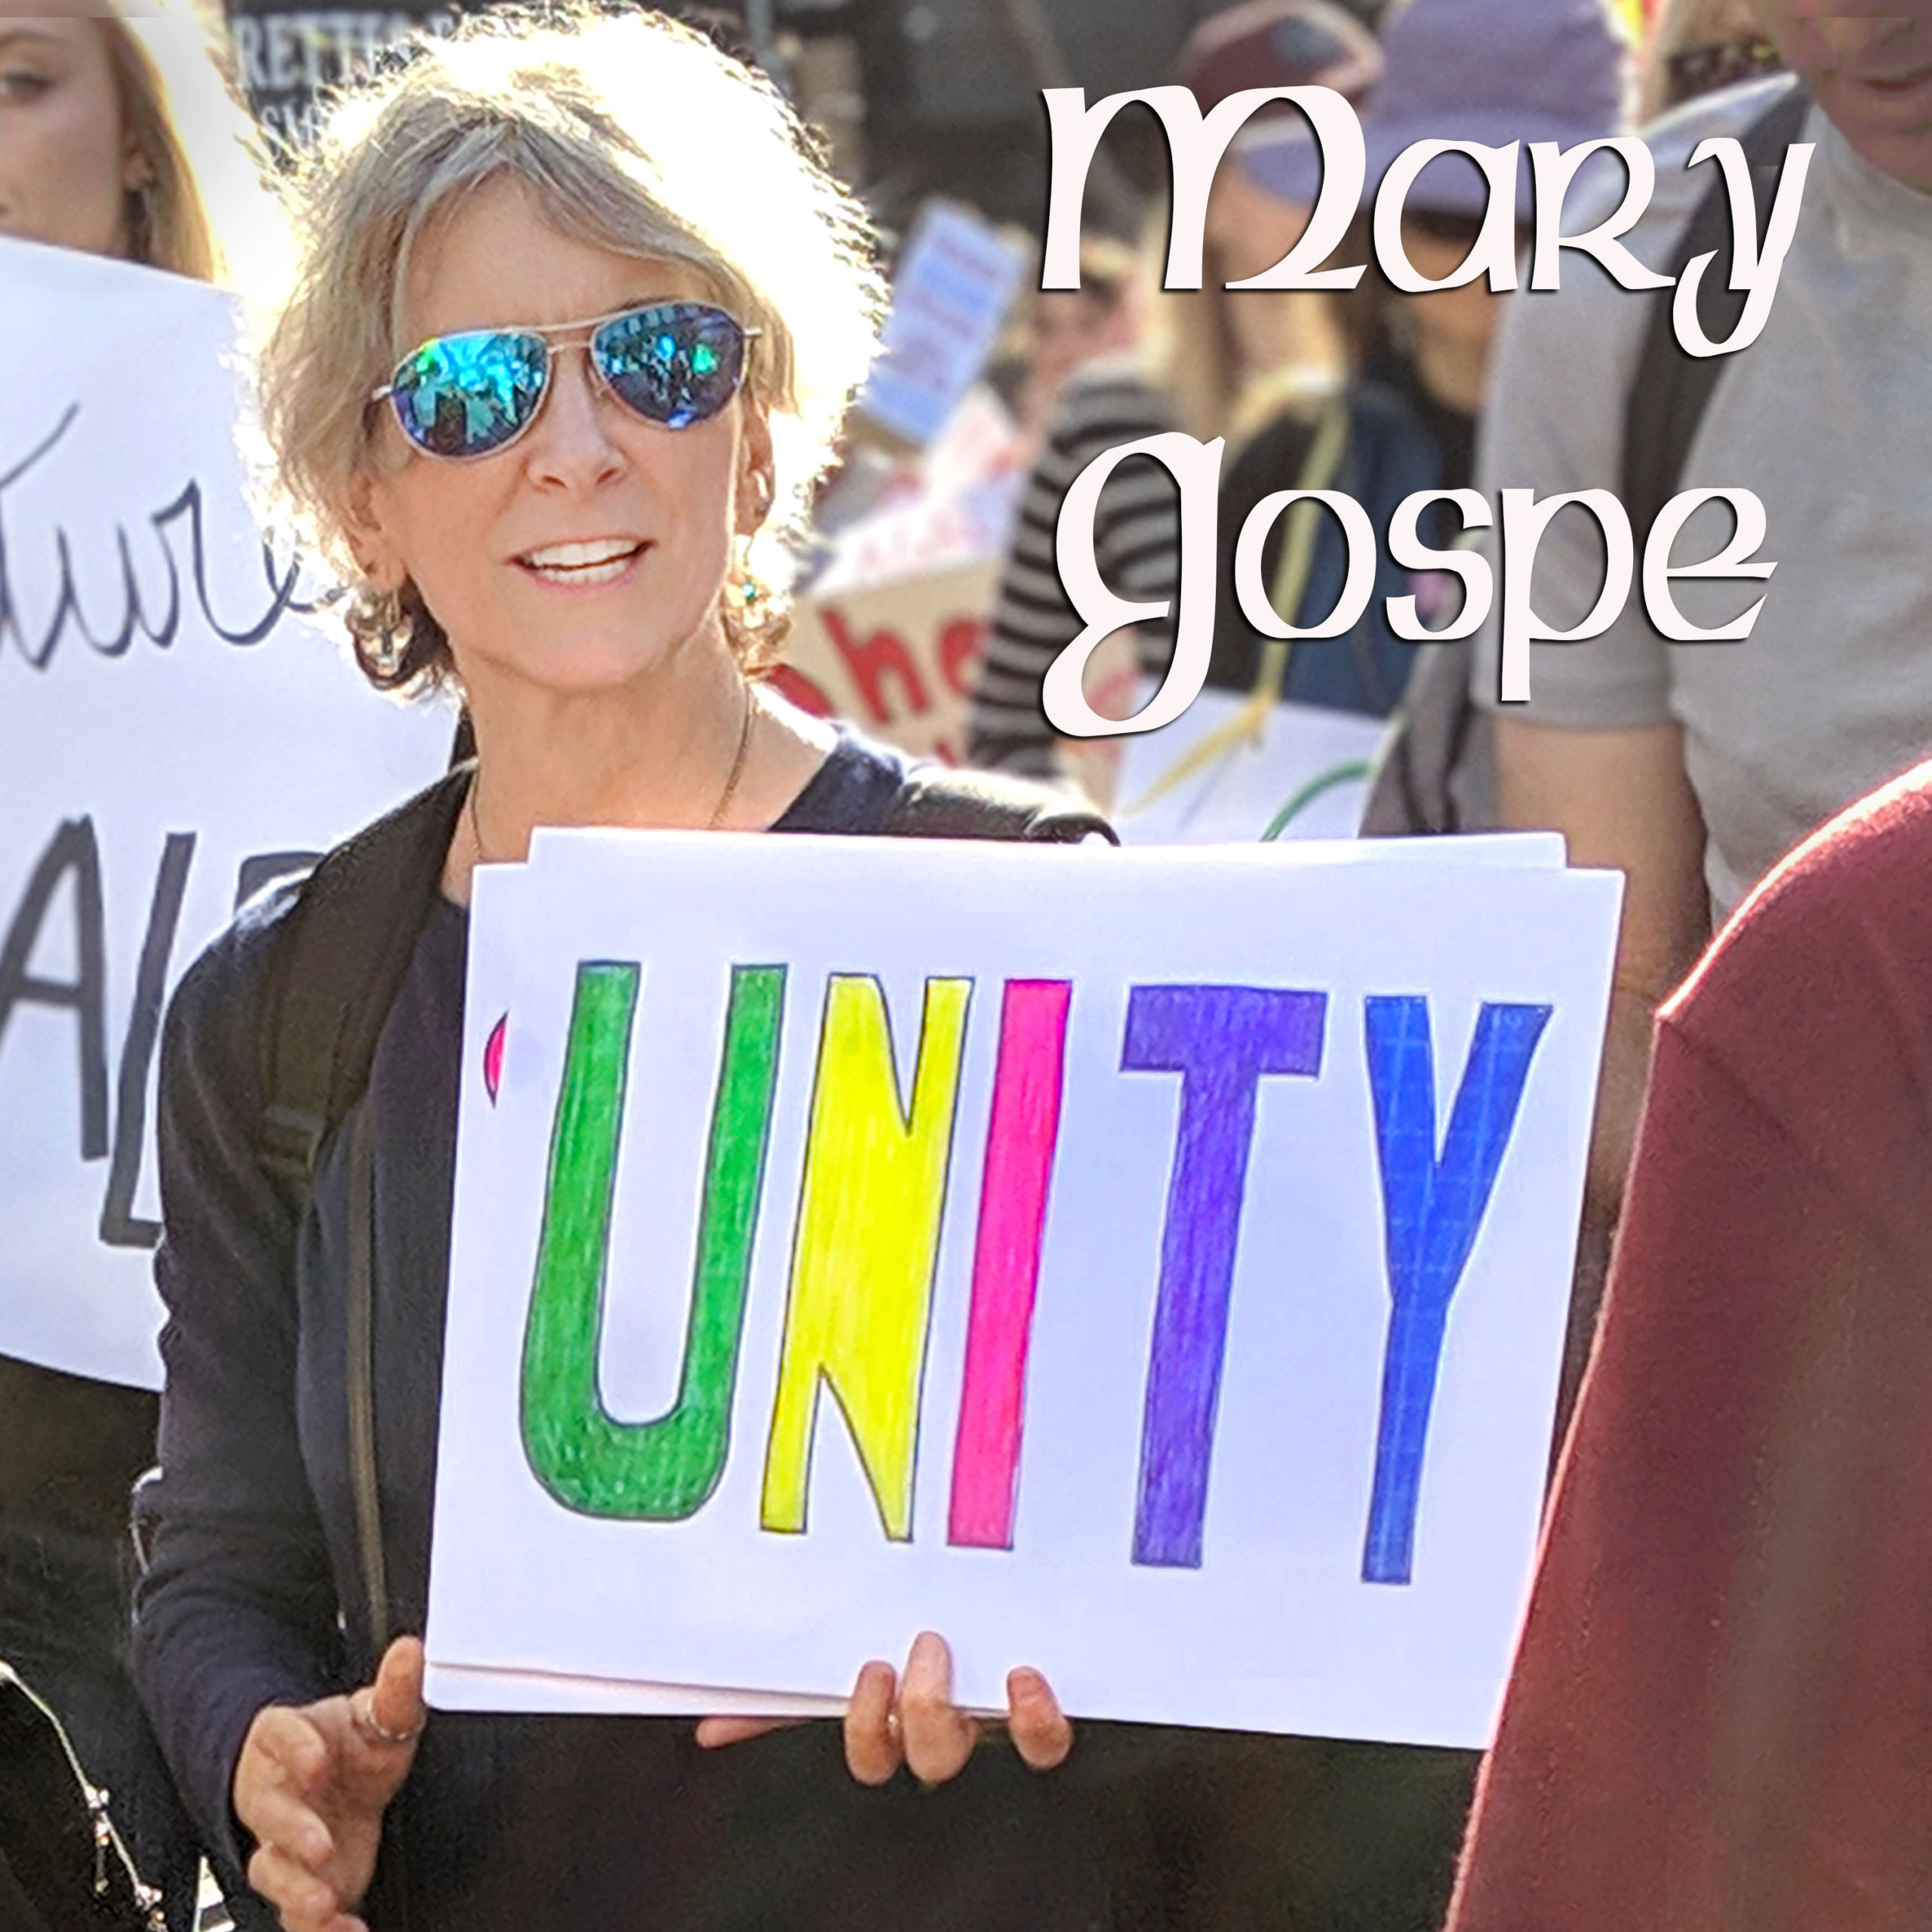 Mary Gospe - Unity